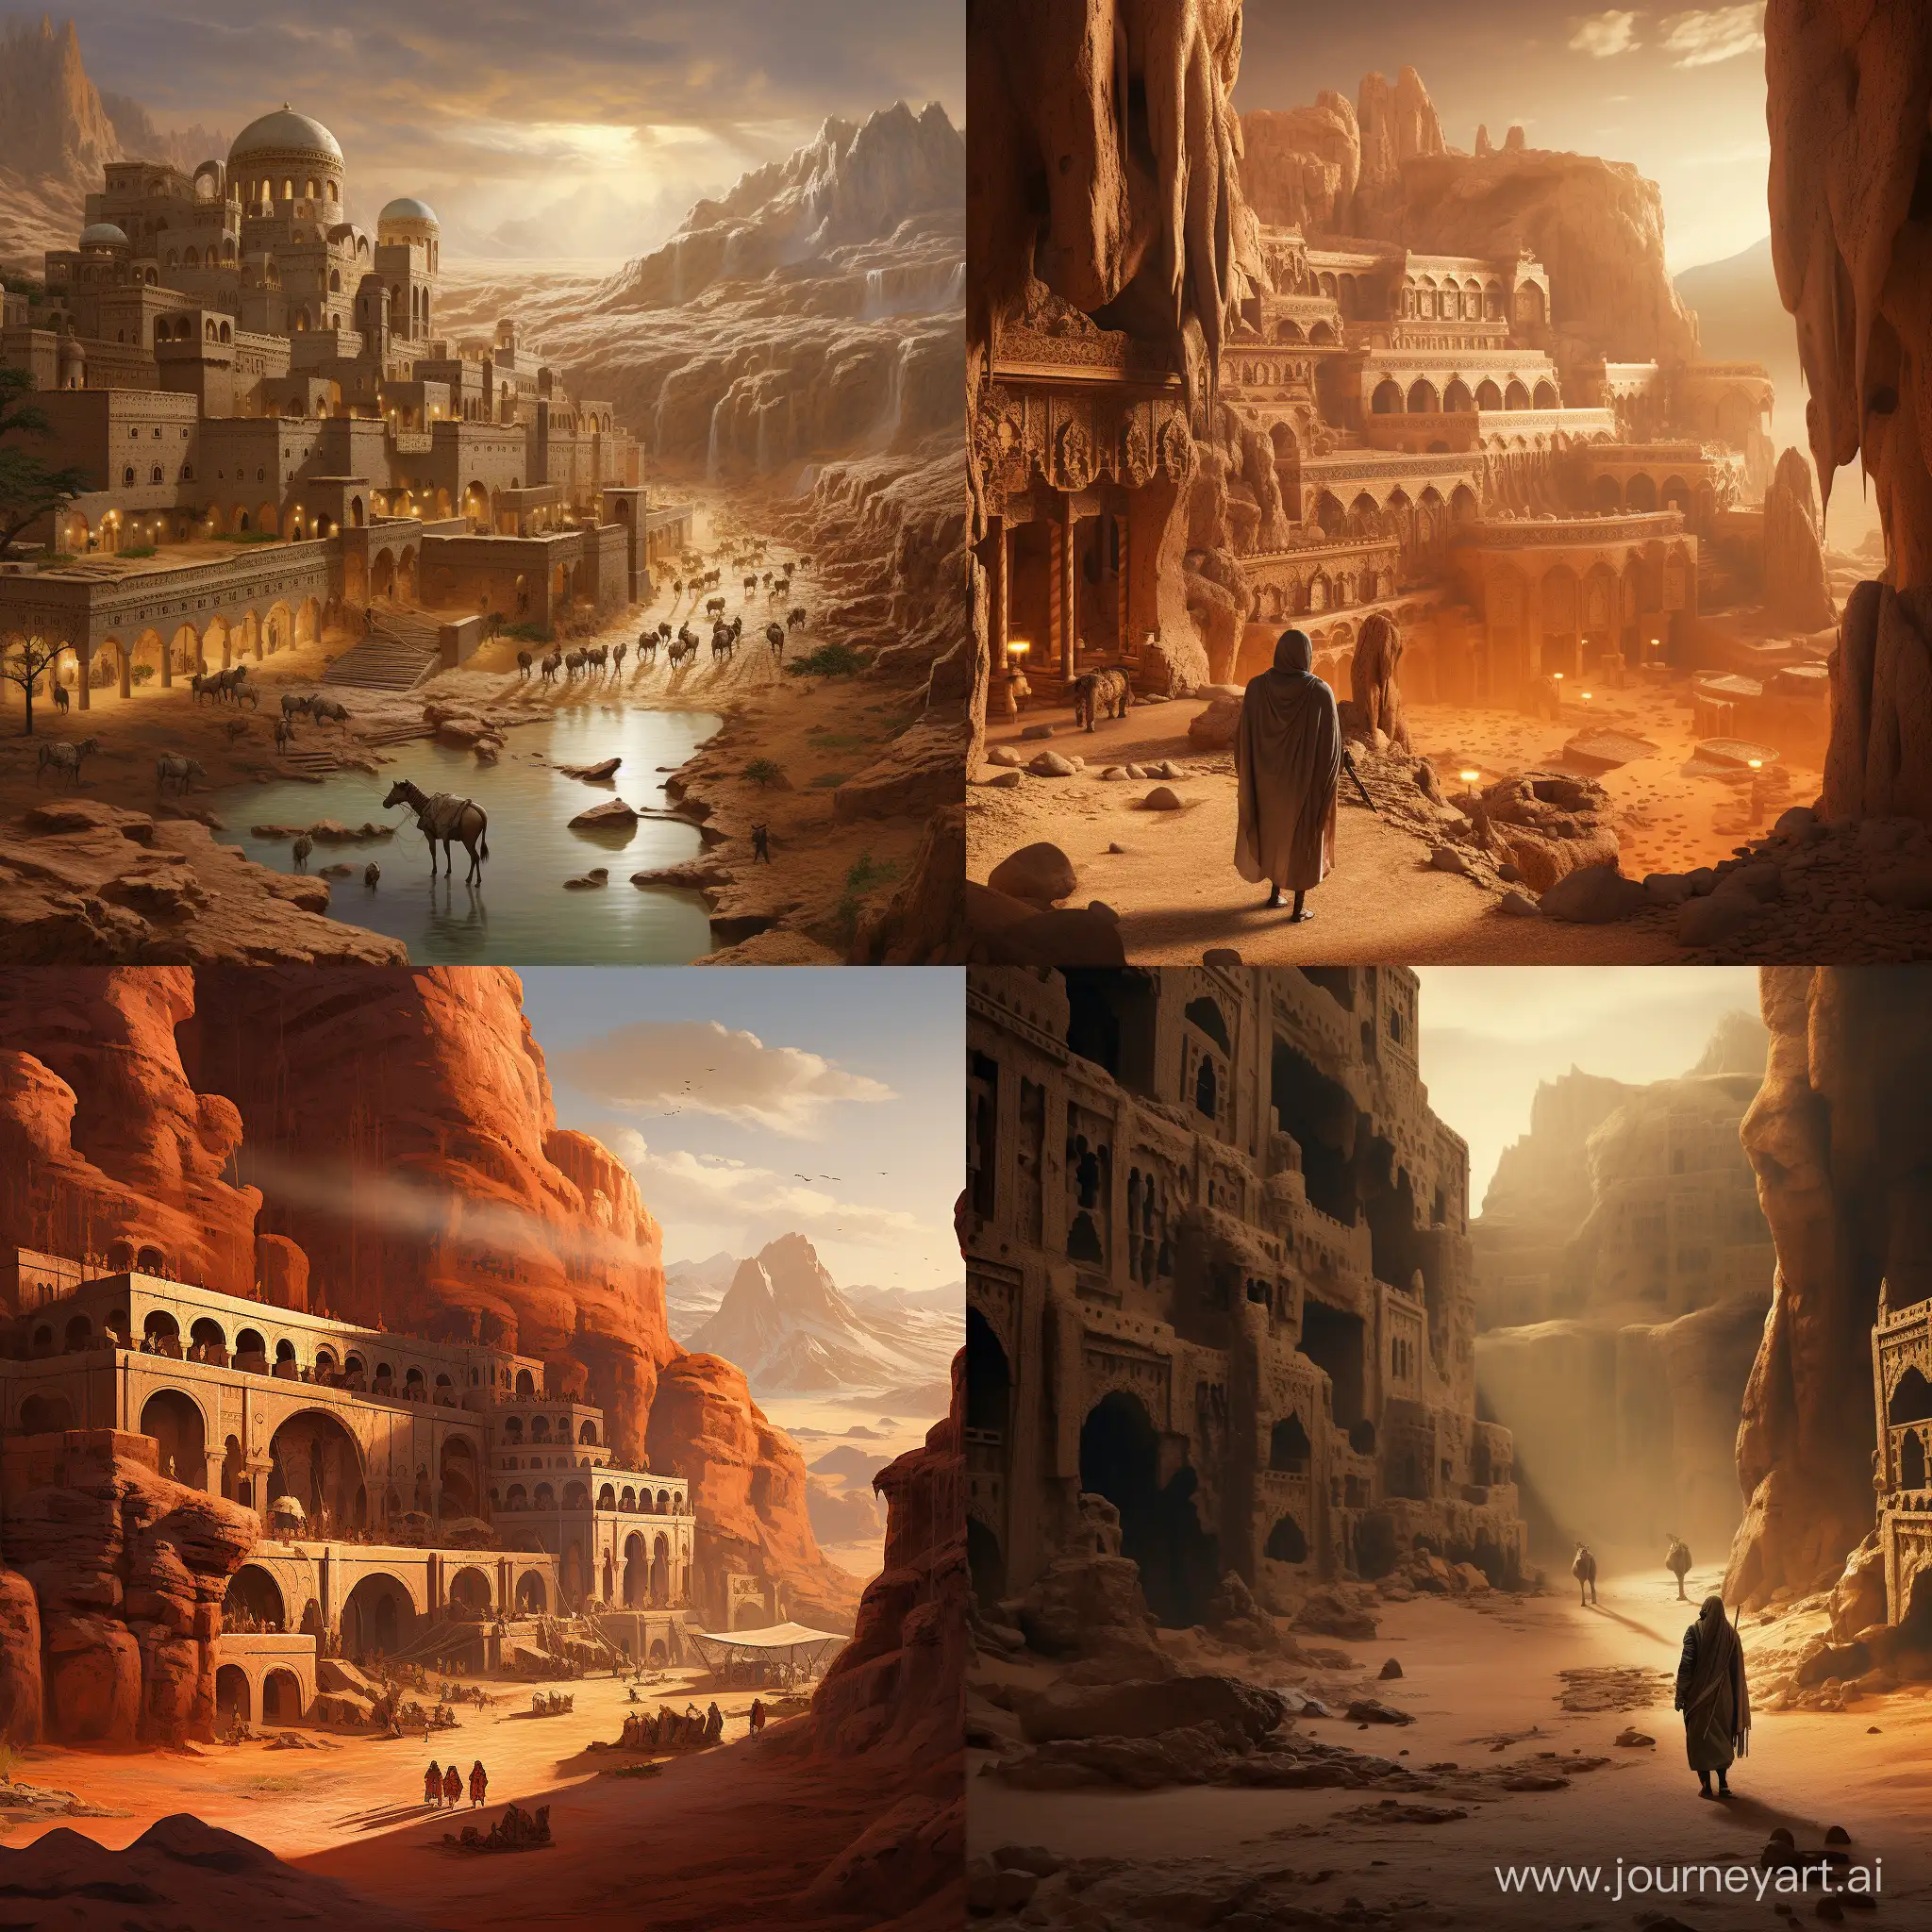 The earthen city of Arabia